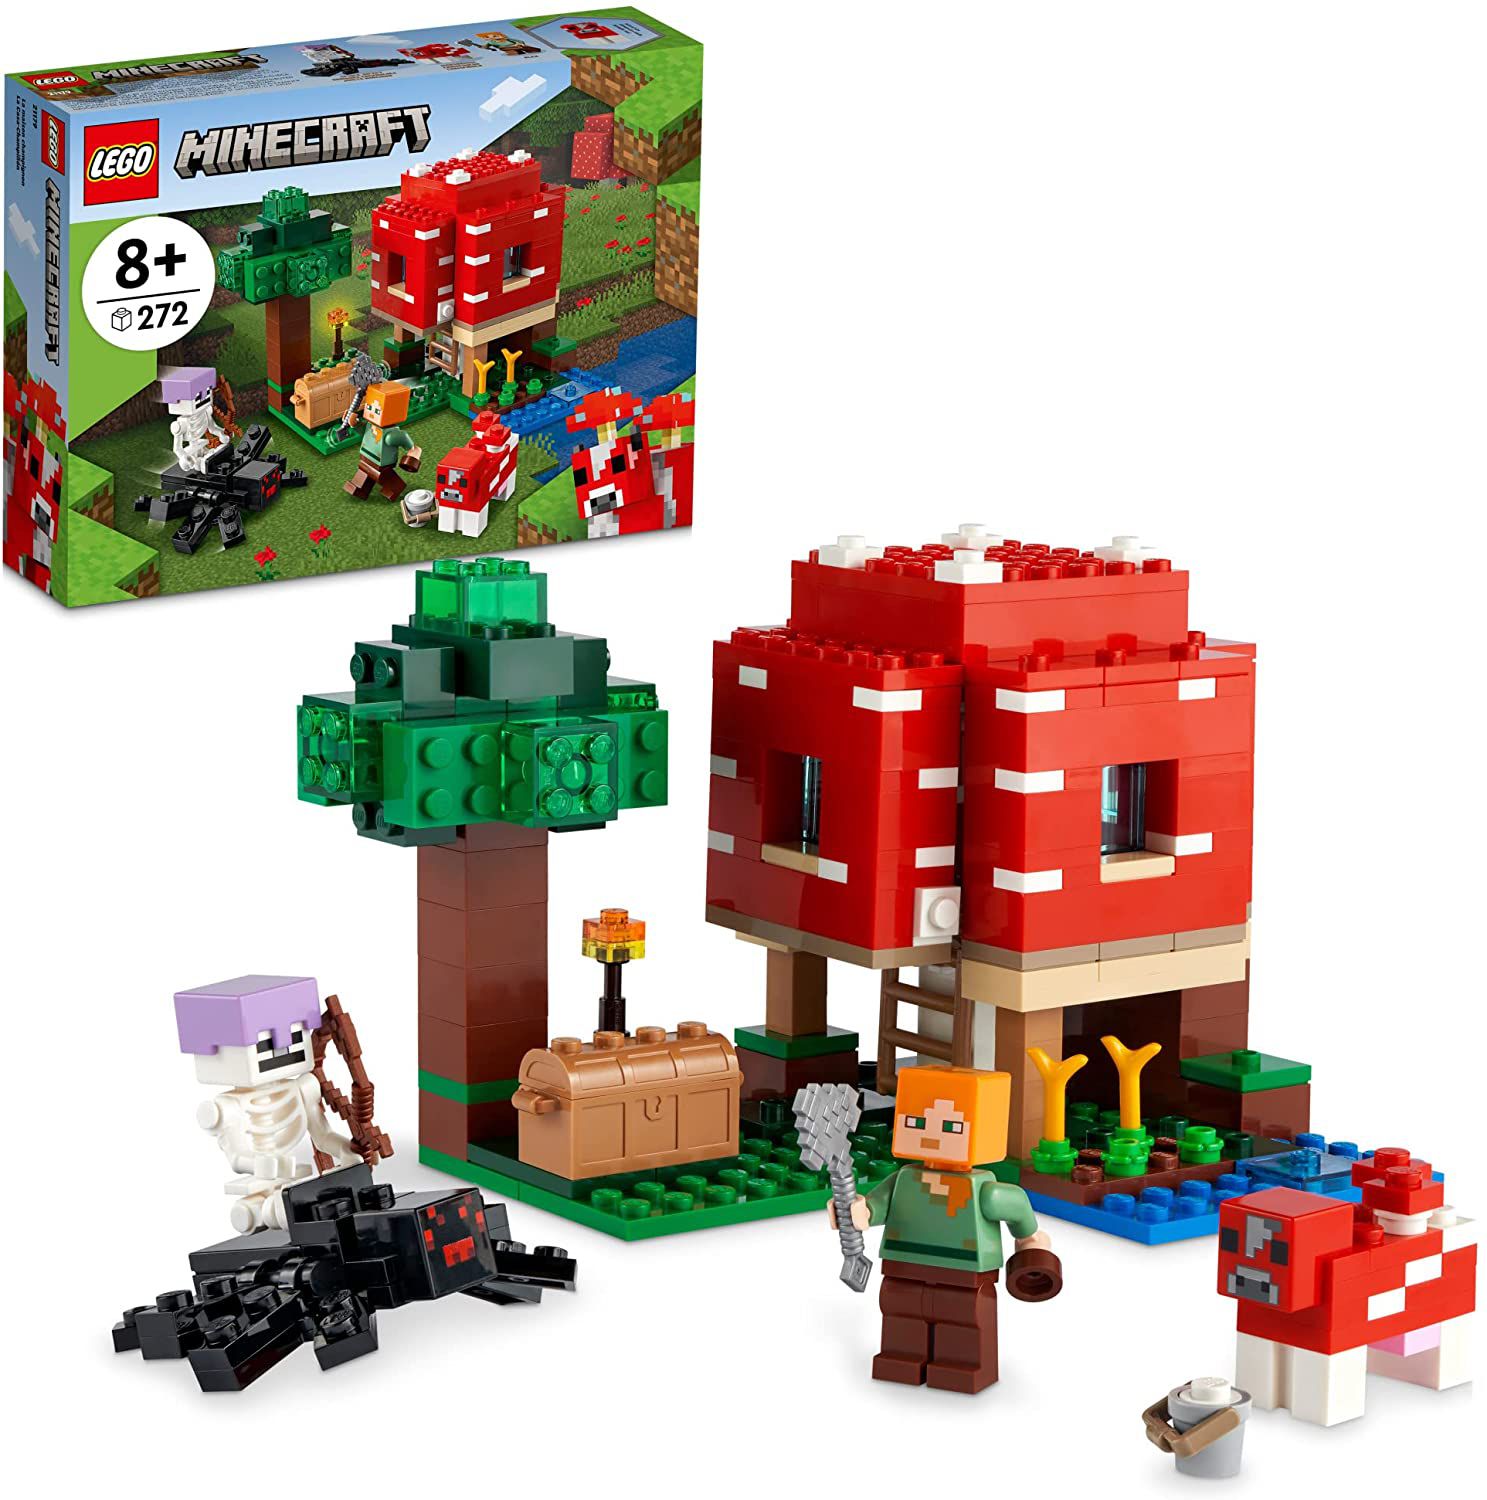 LEGO Minecraft - A Casa da Árvore Moderna - 21174